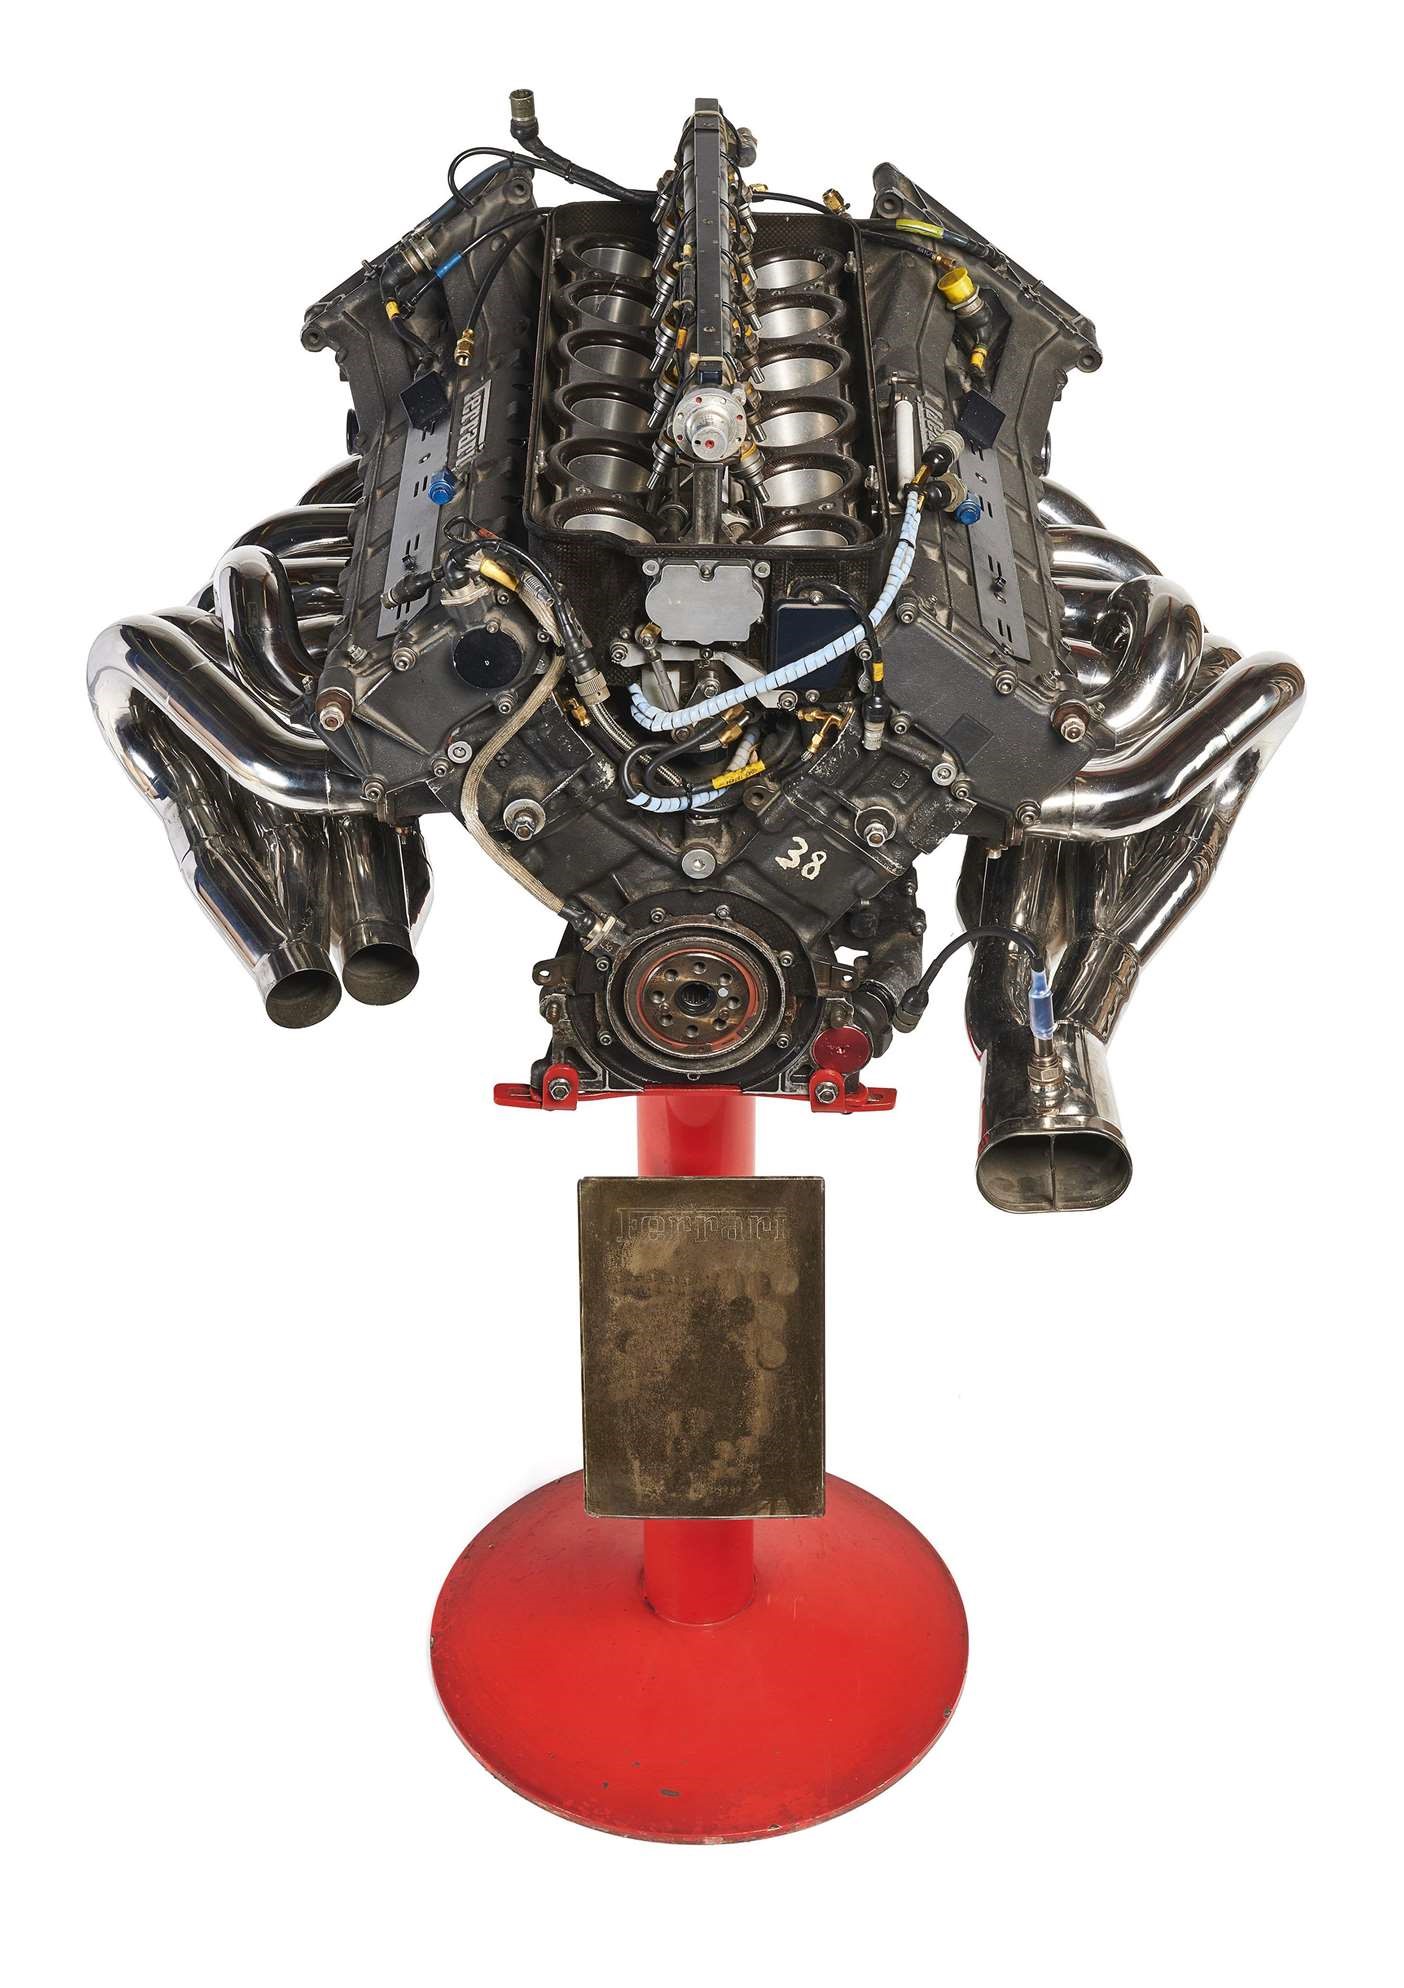 A Ferrari F1 engine.